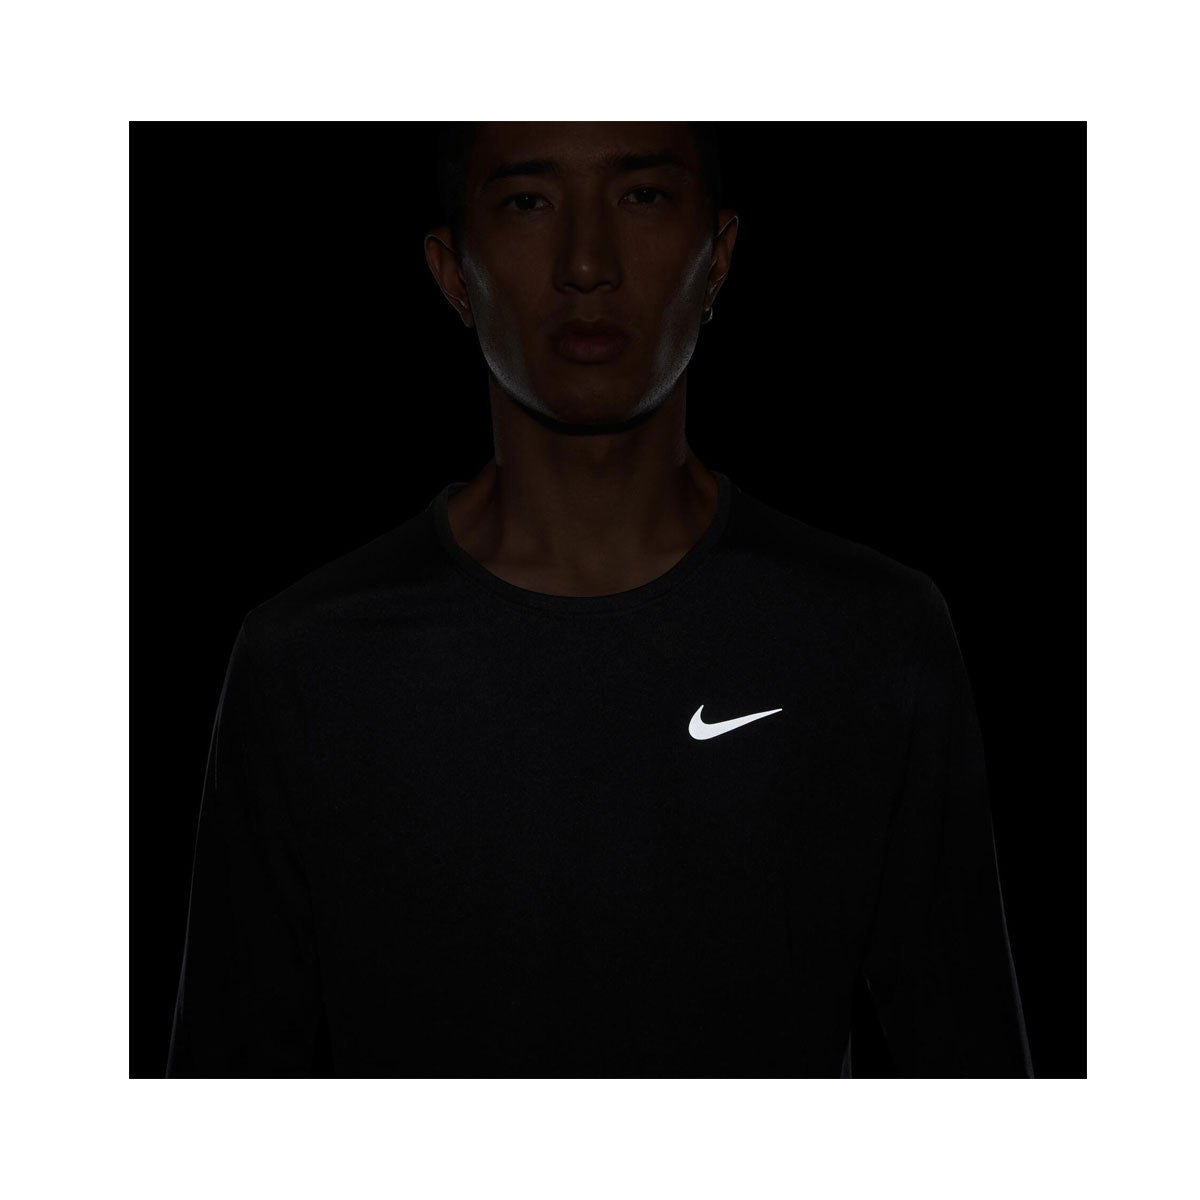 Nike Men's Dri-FIT Miler Long-Sleeve Running Top